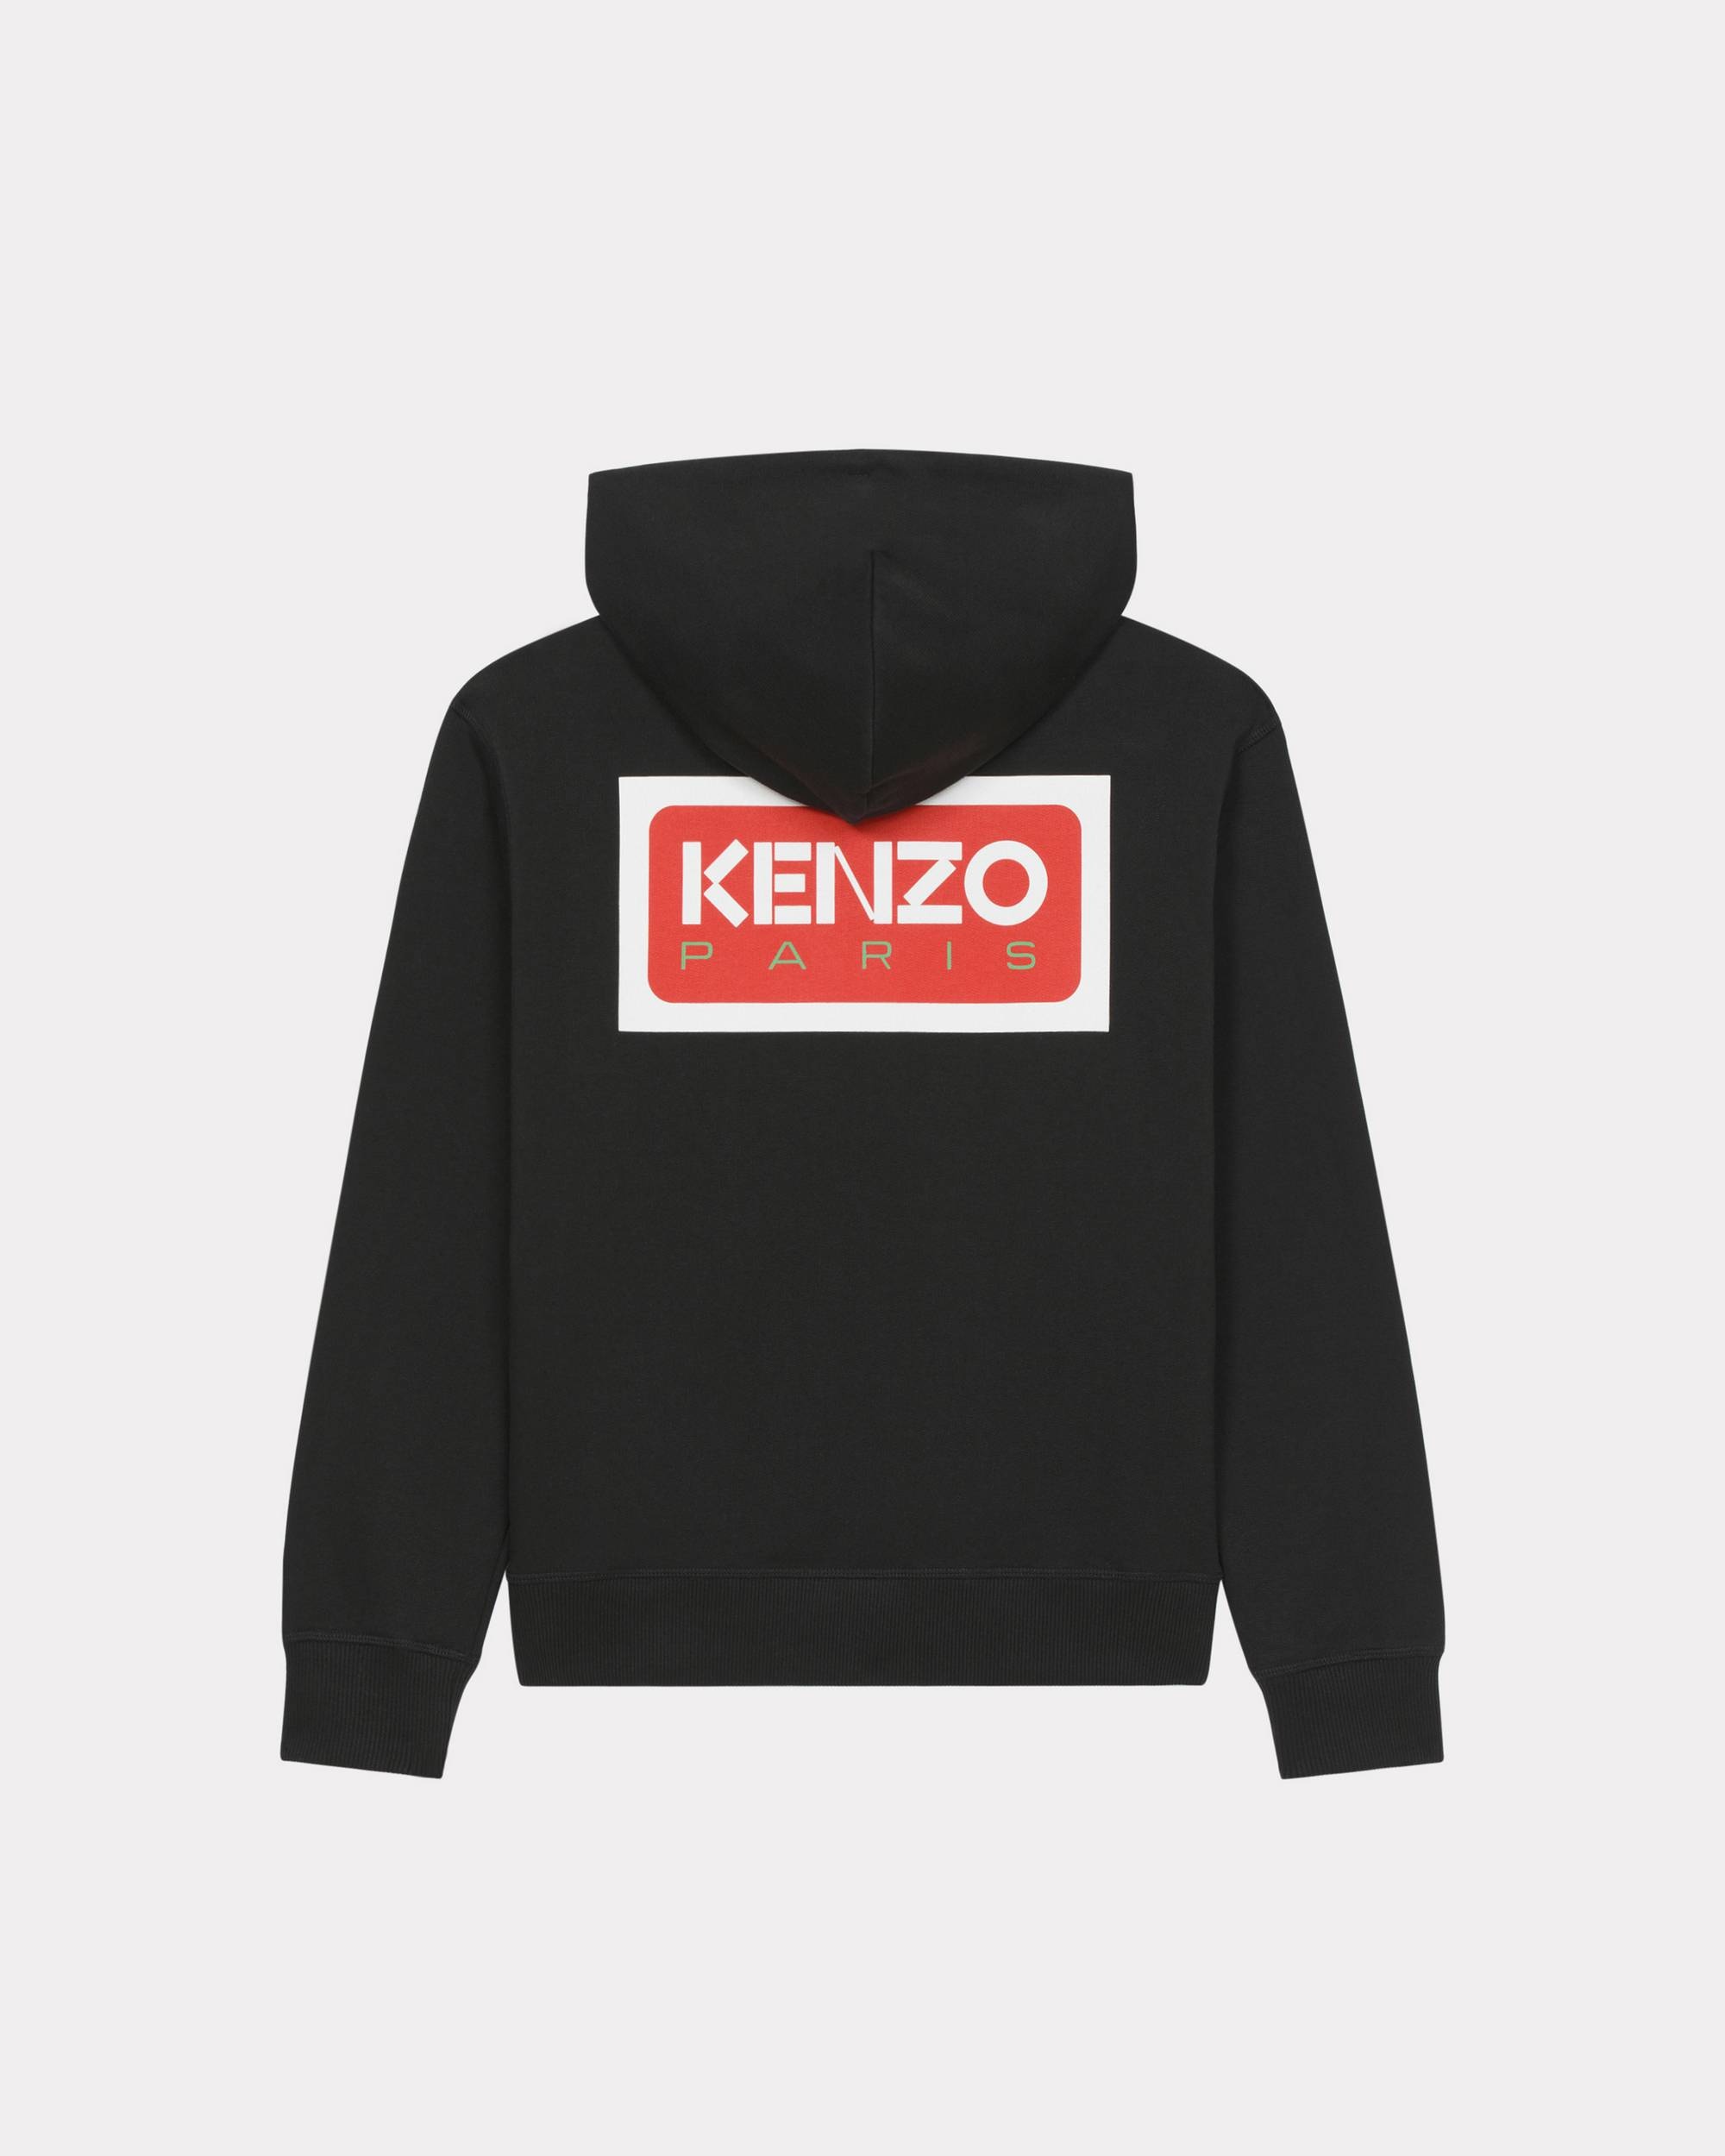 KENZO Paris zipped hoodie sweatshirt - 2